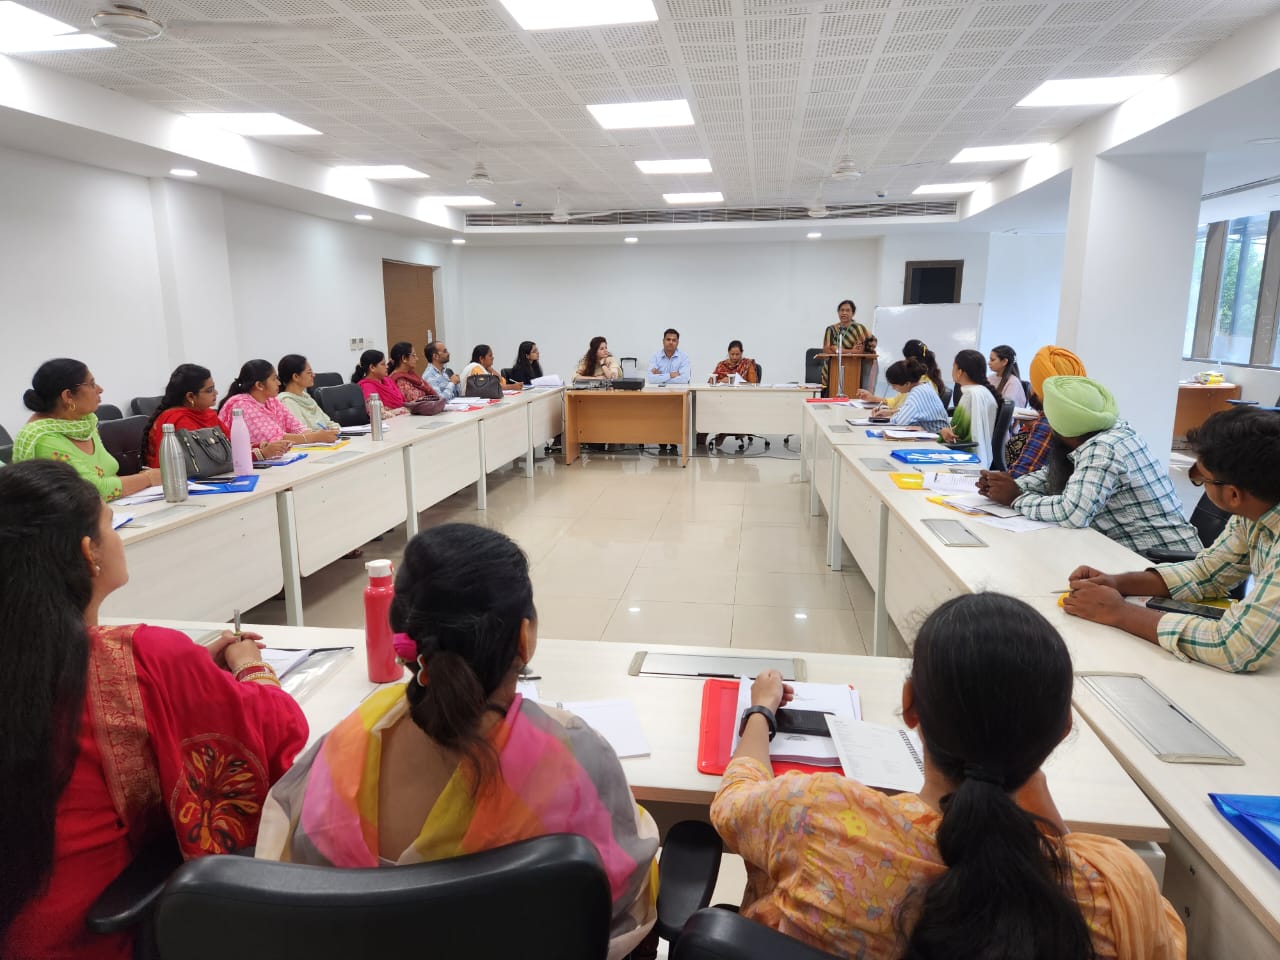 Training conducted on "Poshan Bhi Padhai Bhi" to enhance education and nutrition in Anganwadi centres